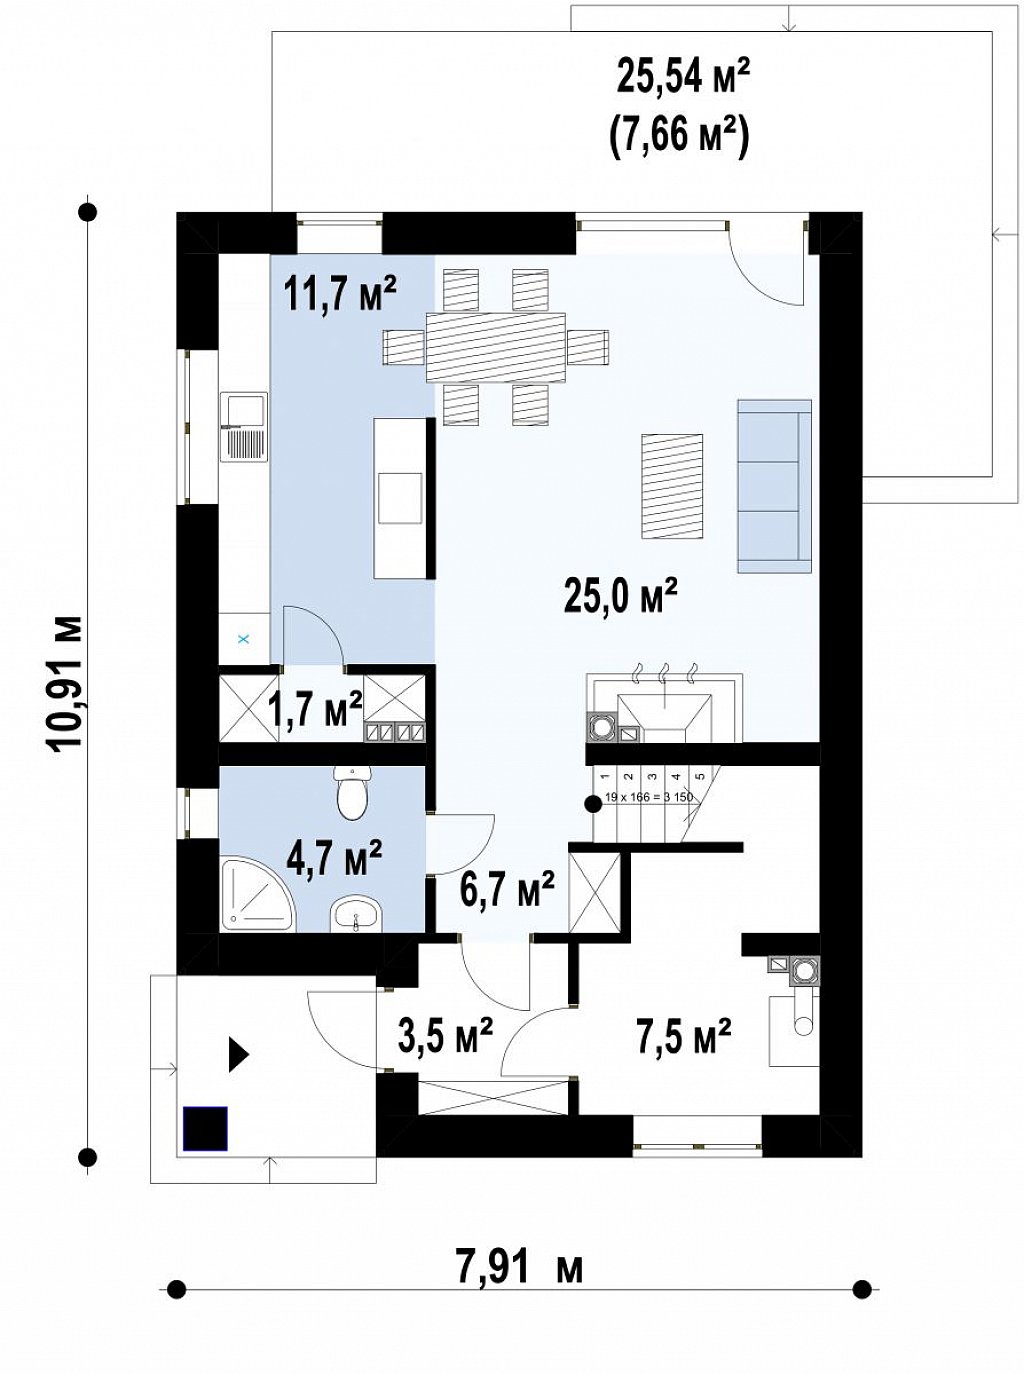 Вариант двухэтажного дома проекта Zz3 план помещений 1